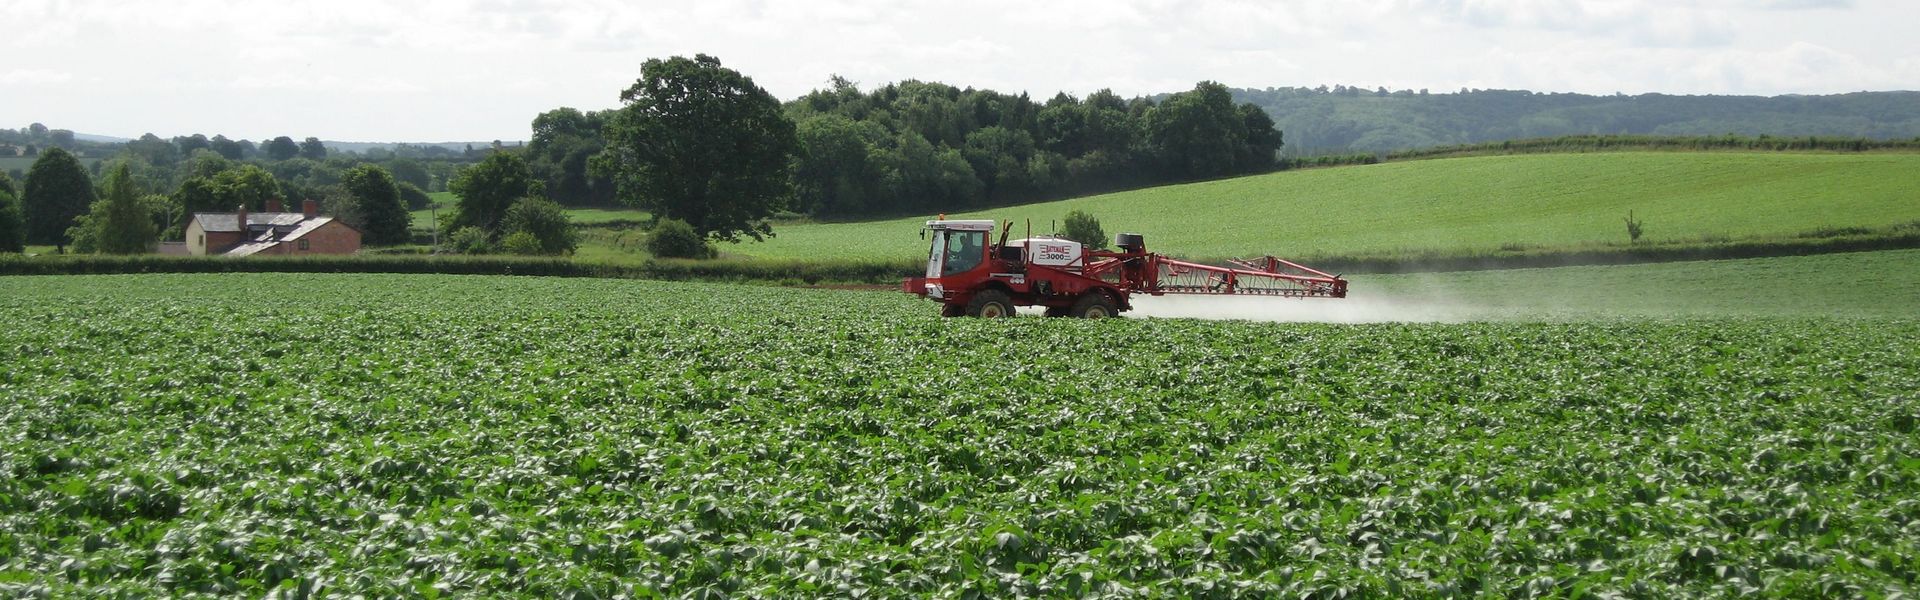 spraying in a potato field